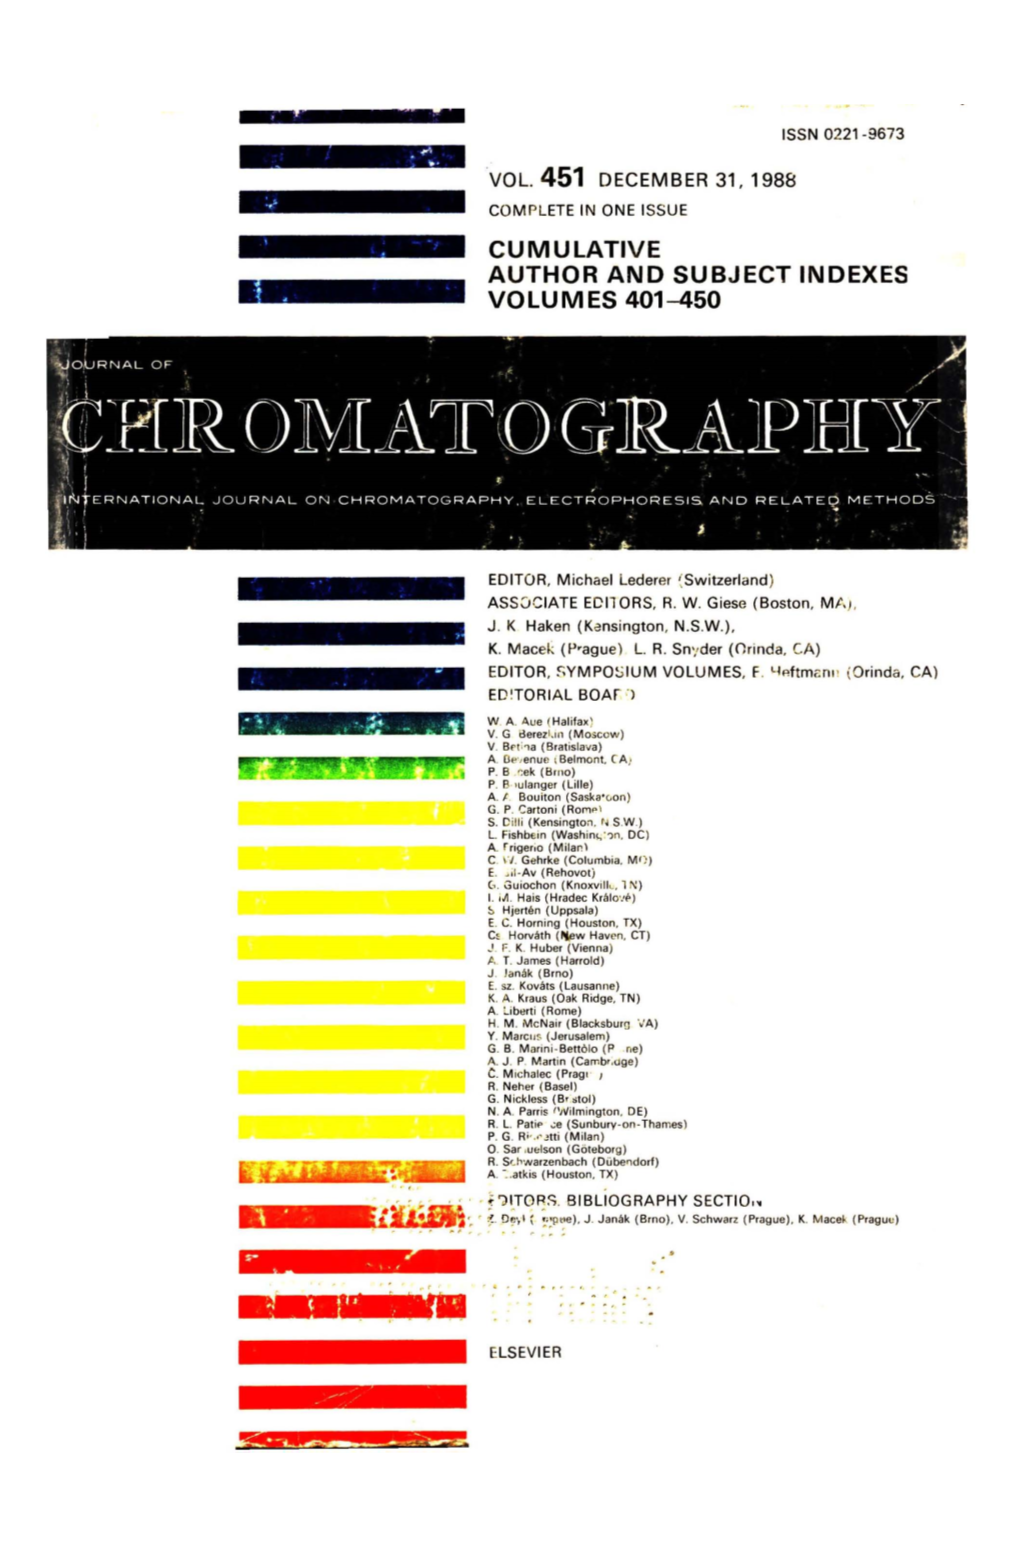 Journal of Chromatography Vol. 451 December 31, 1988